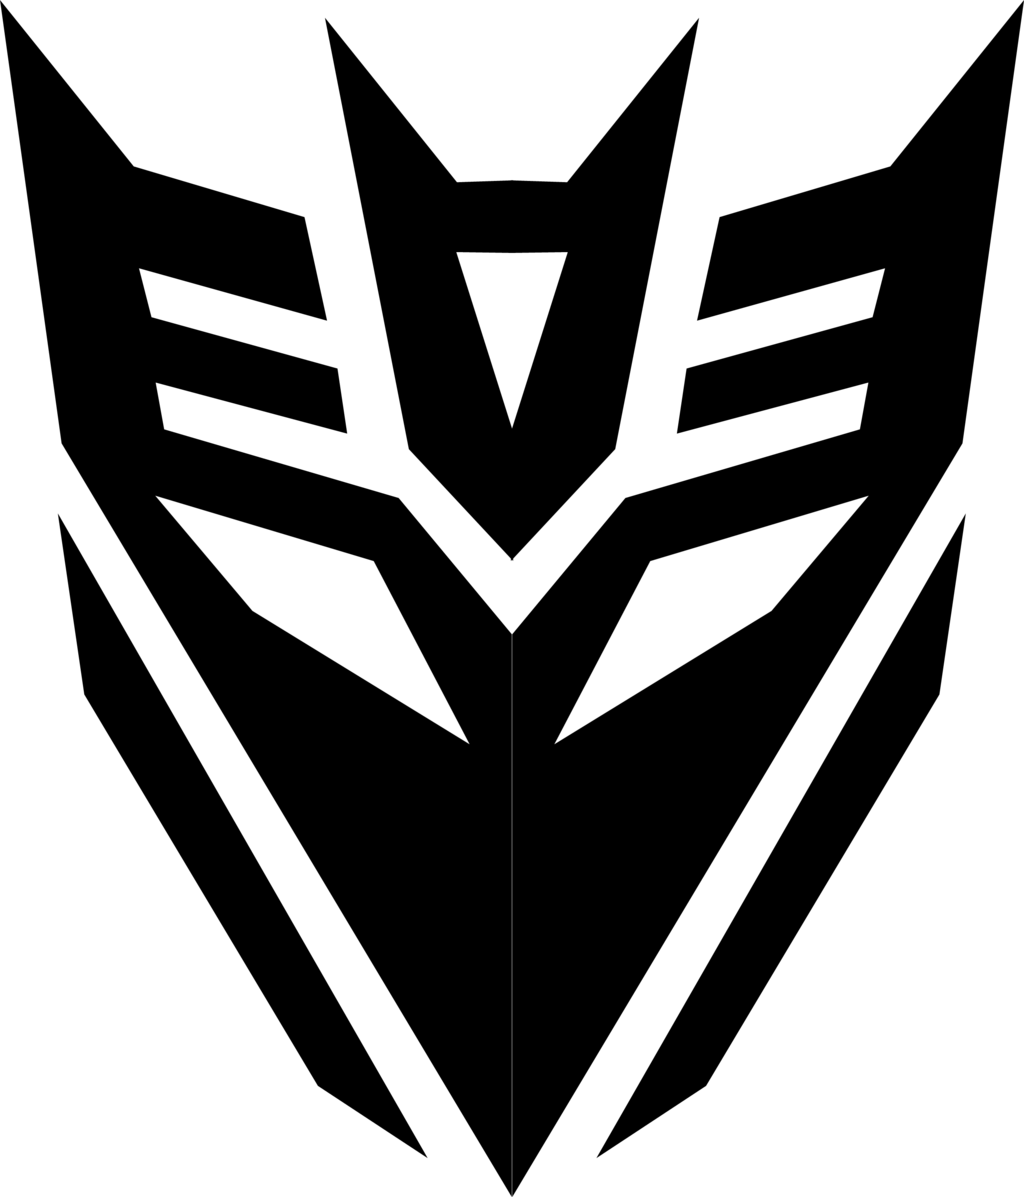 Transformers Black and White Logo - Transformers Logo Outline - 19563 - TransparentPNG